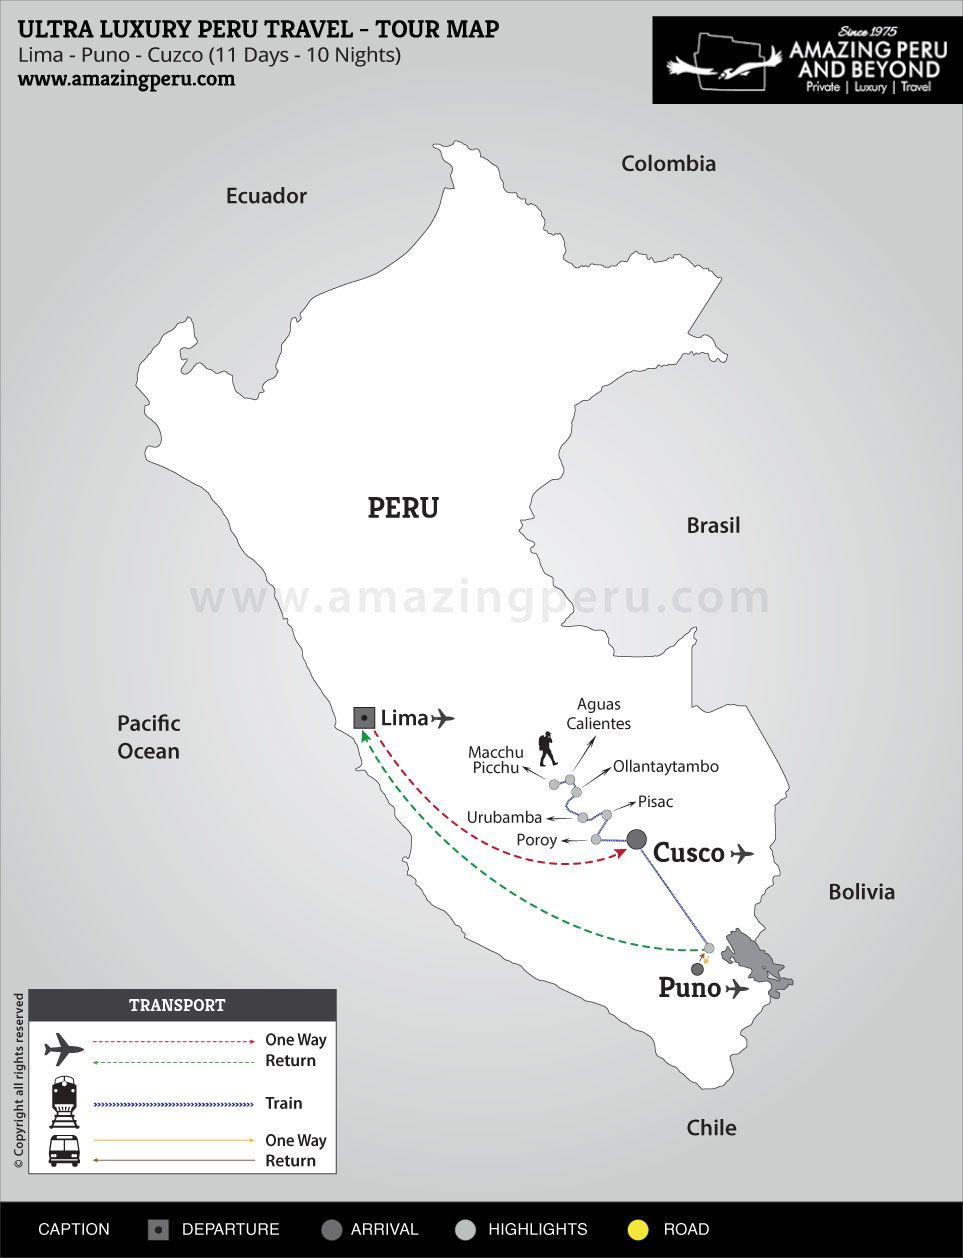 Ultra Luxury Peru Travel - A personal discovery - 11 days / 10 nights.